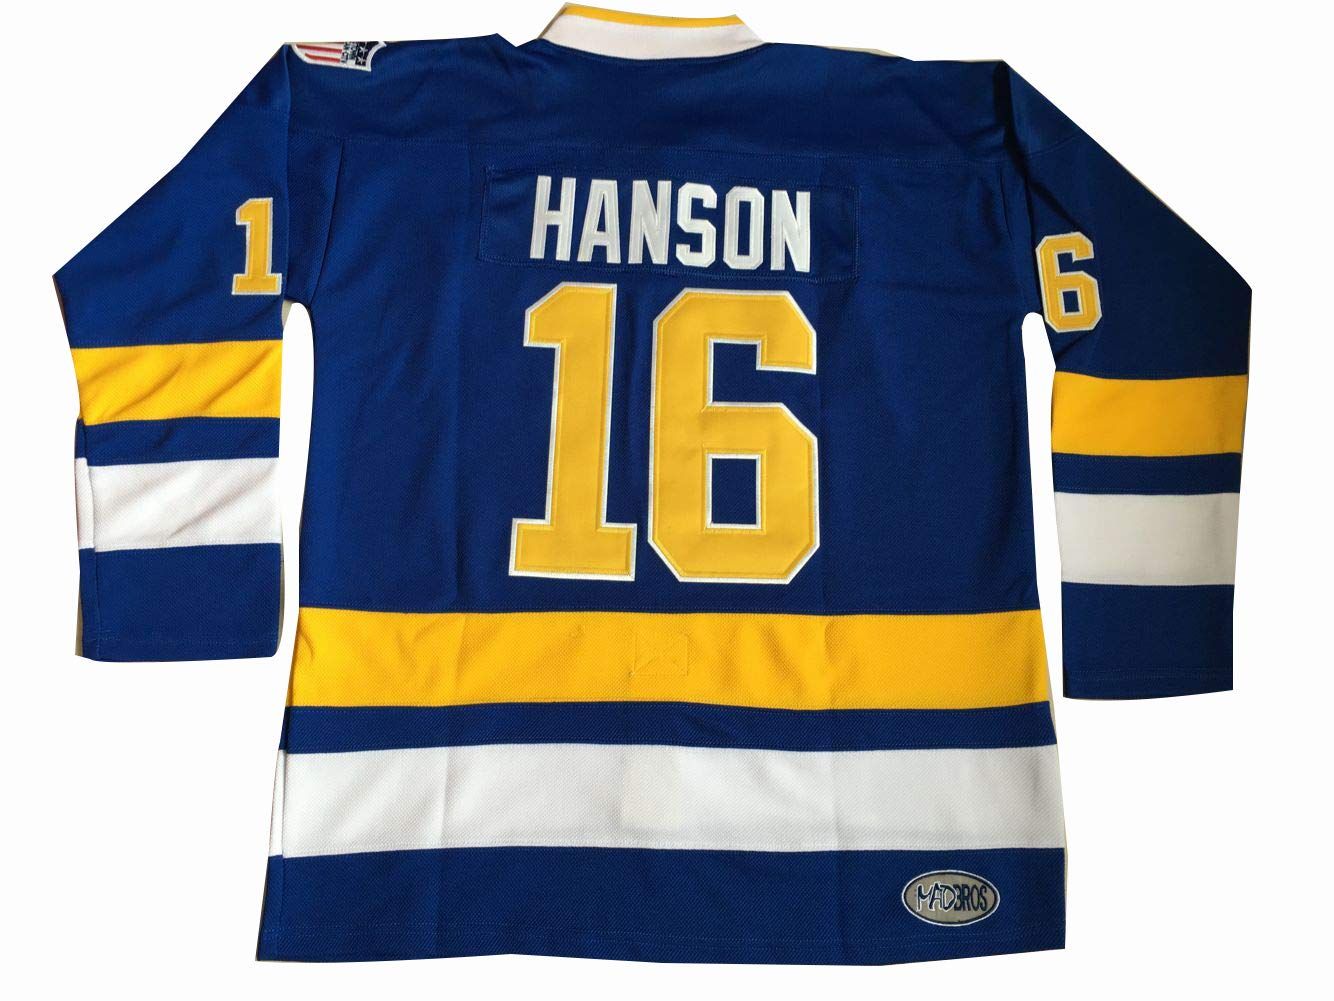 16 Hanson Blue